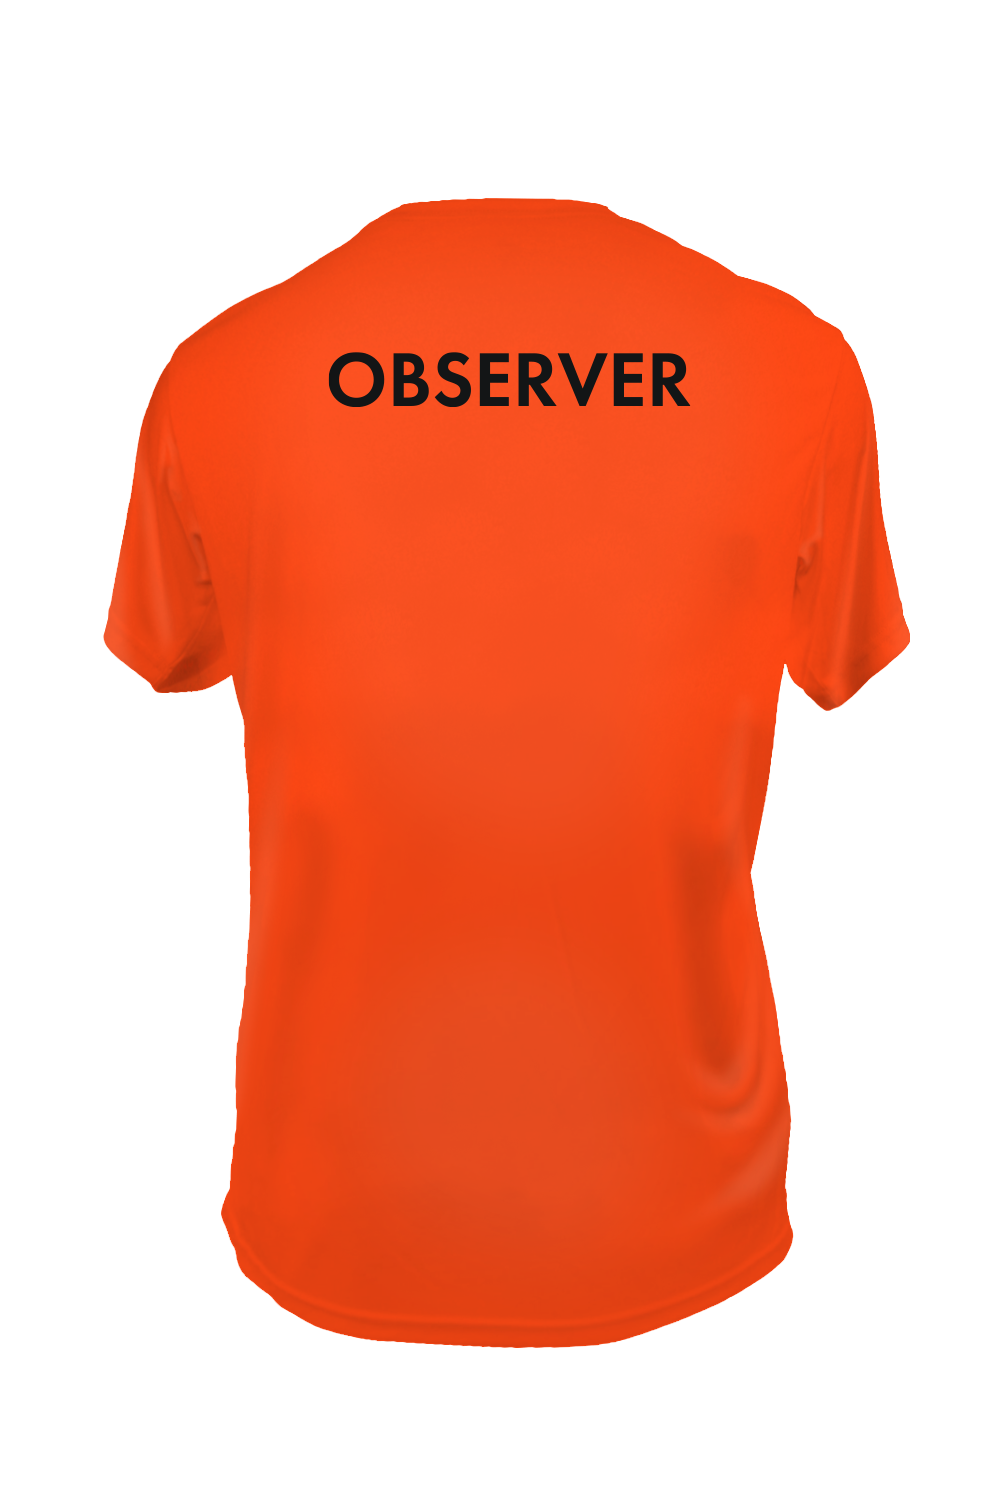 Observer Short Sleeve Jersey (Orange)